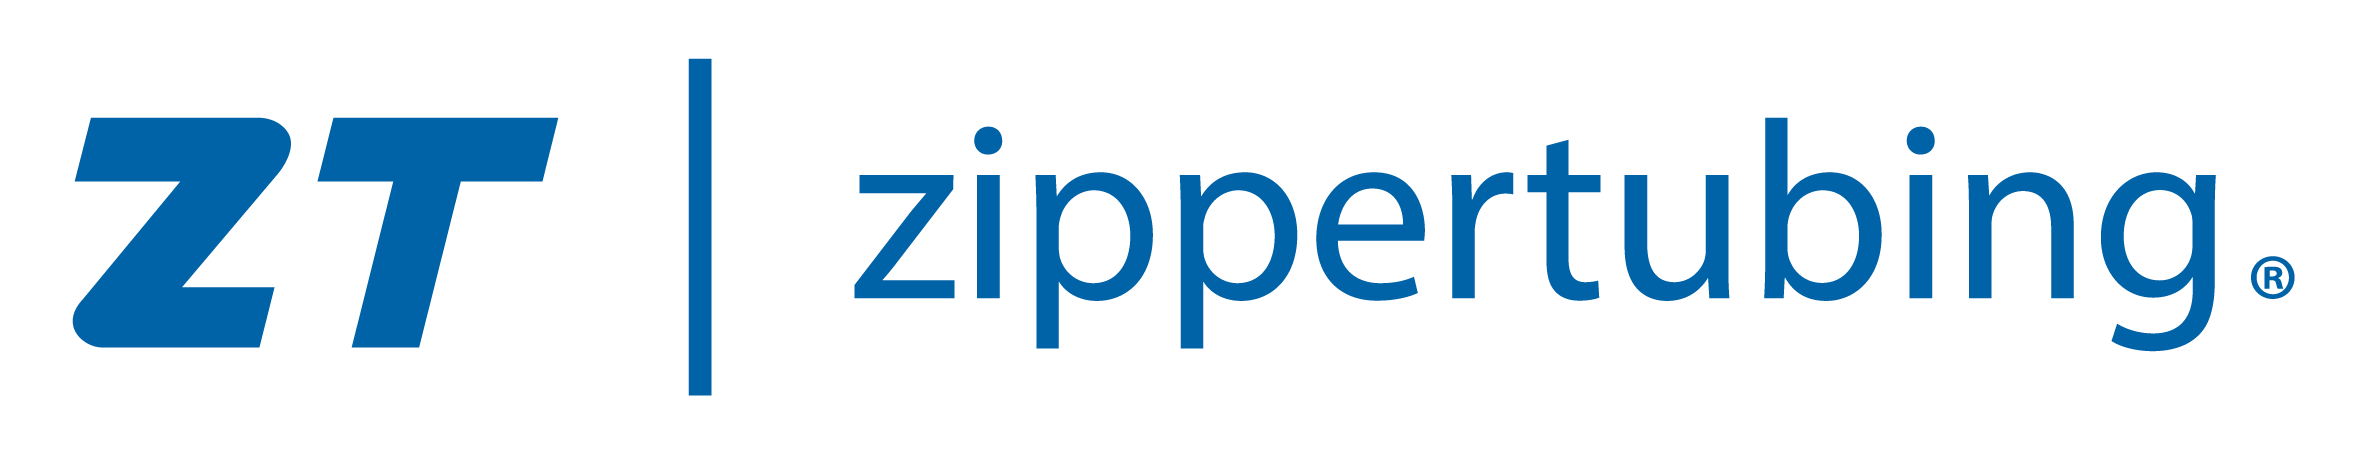 The Zippertubing Company logo